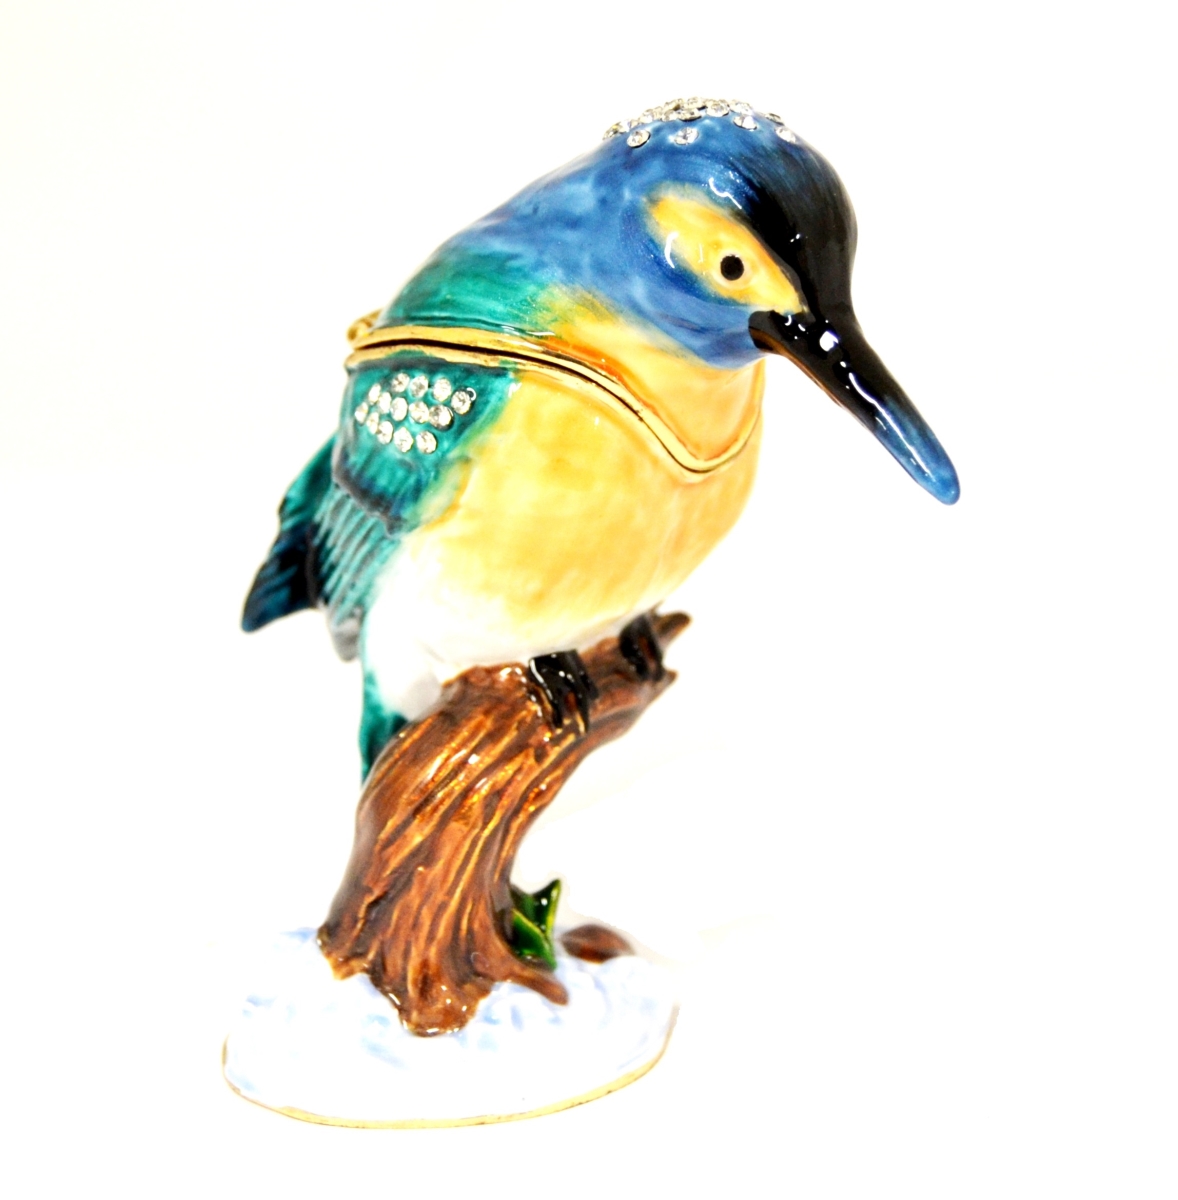 1013091 Kingfisher Bird On Branch Gold Plating Trinket Box - Swarovski Crystals & Colorful Enamel